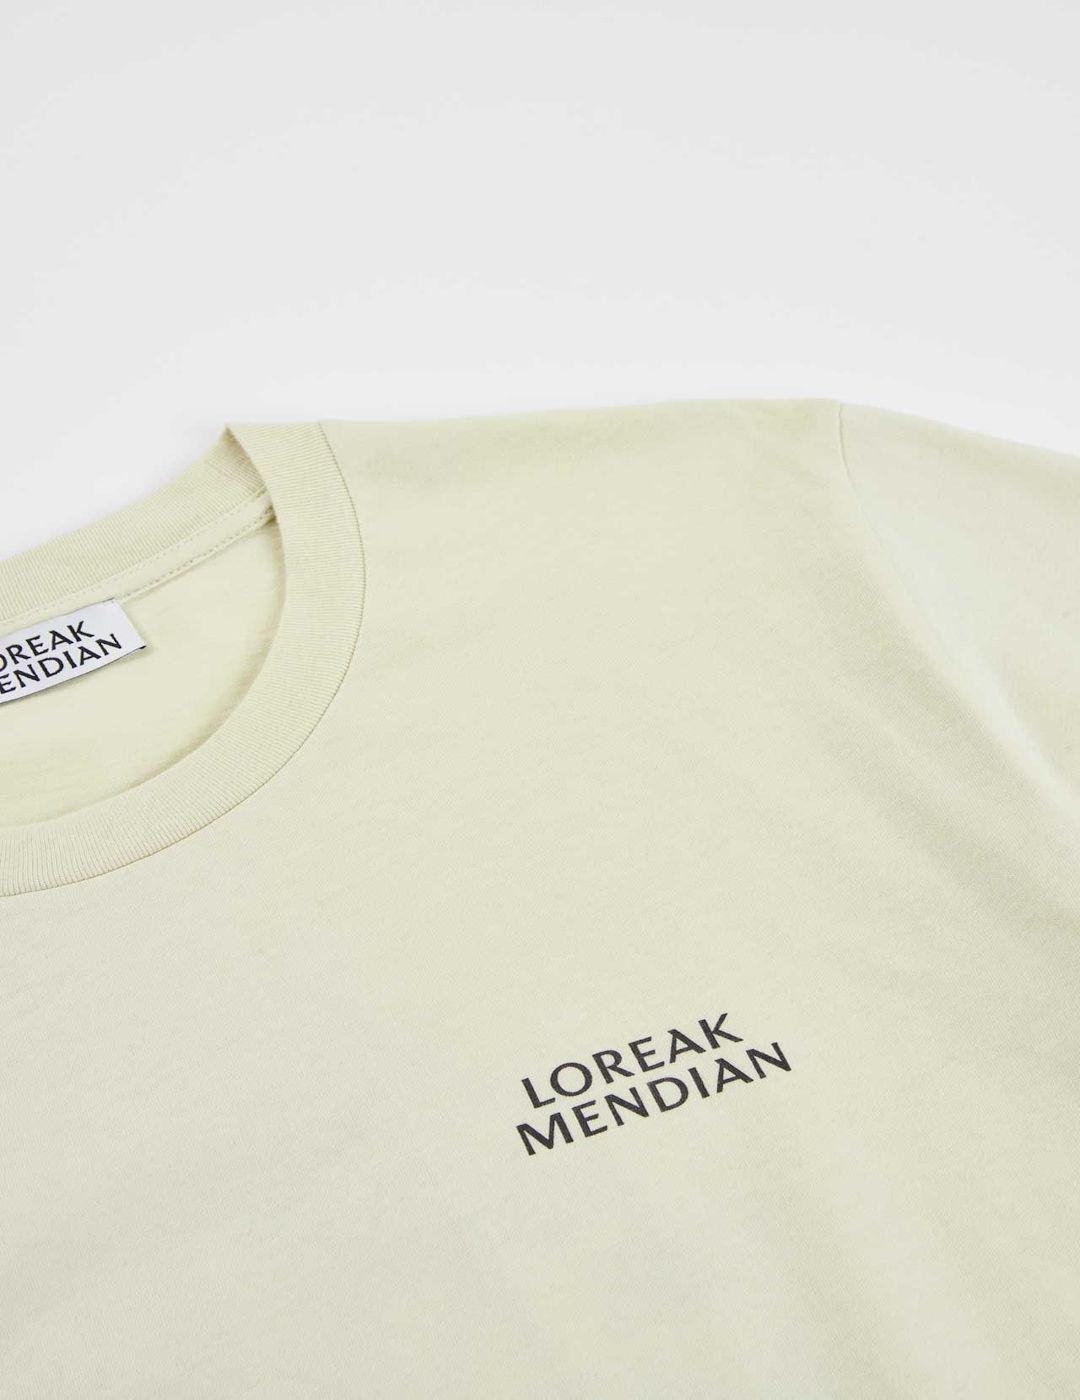 Camiseta Loreak Mendian First Choice